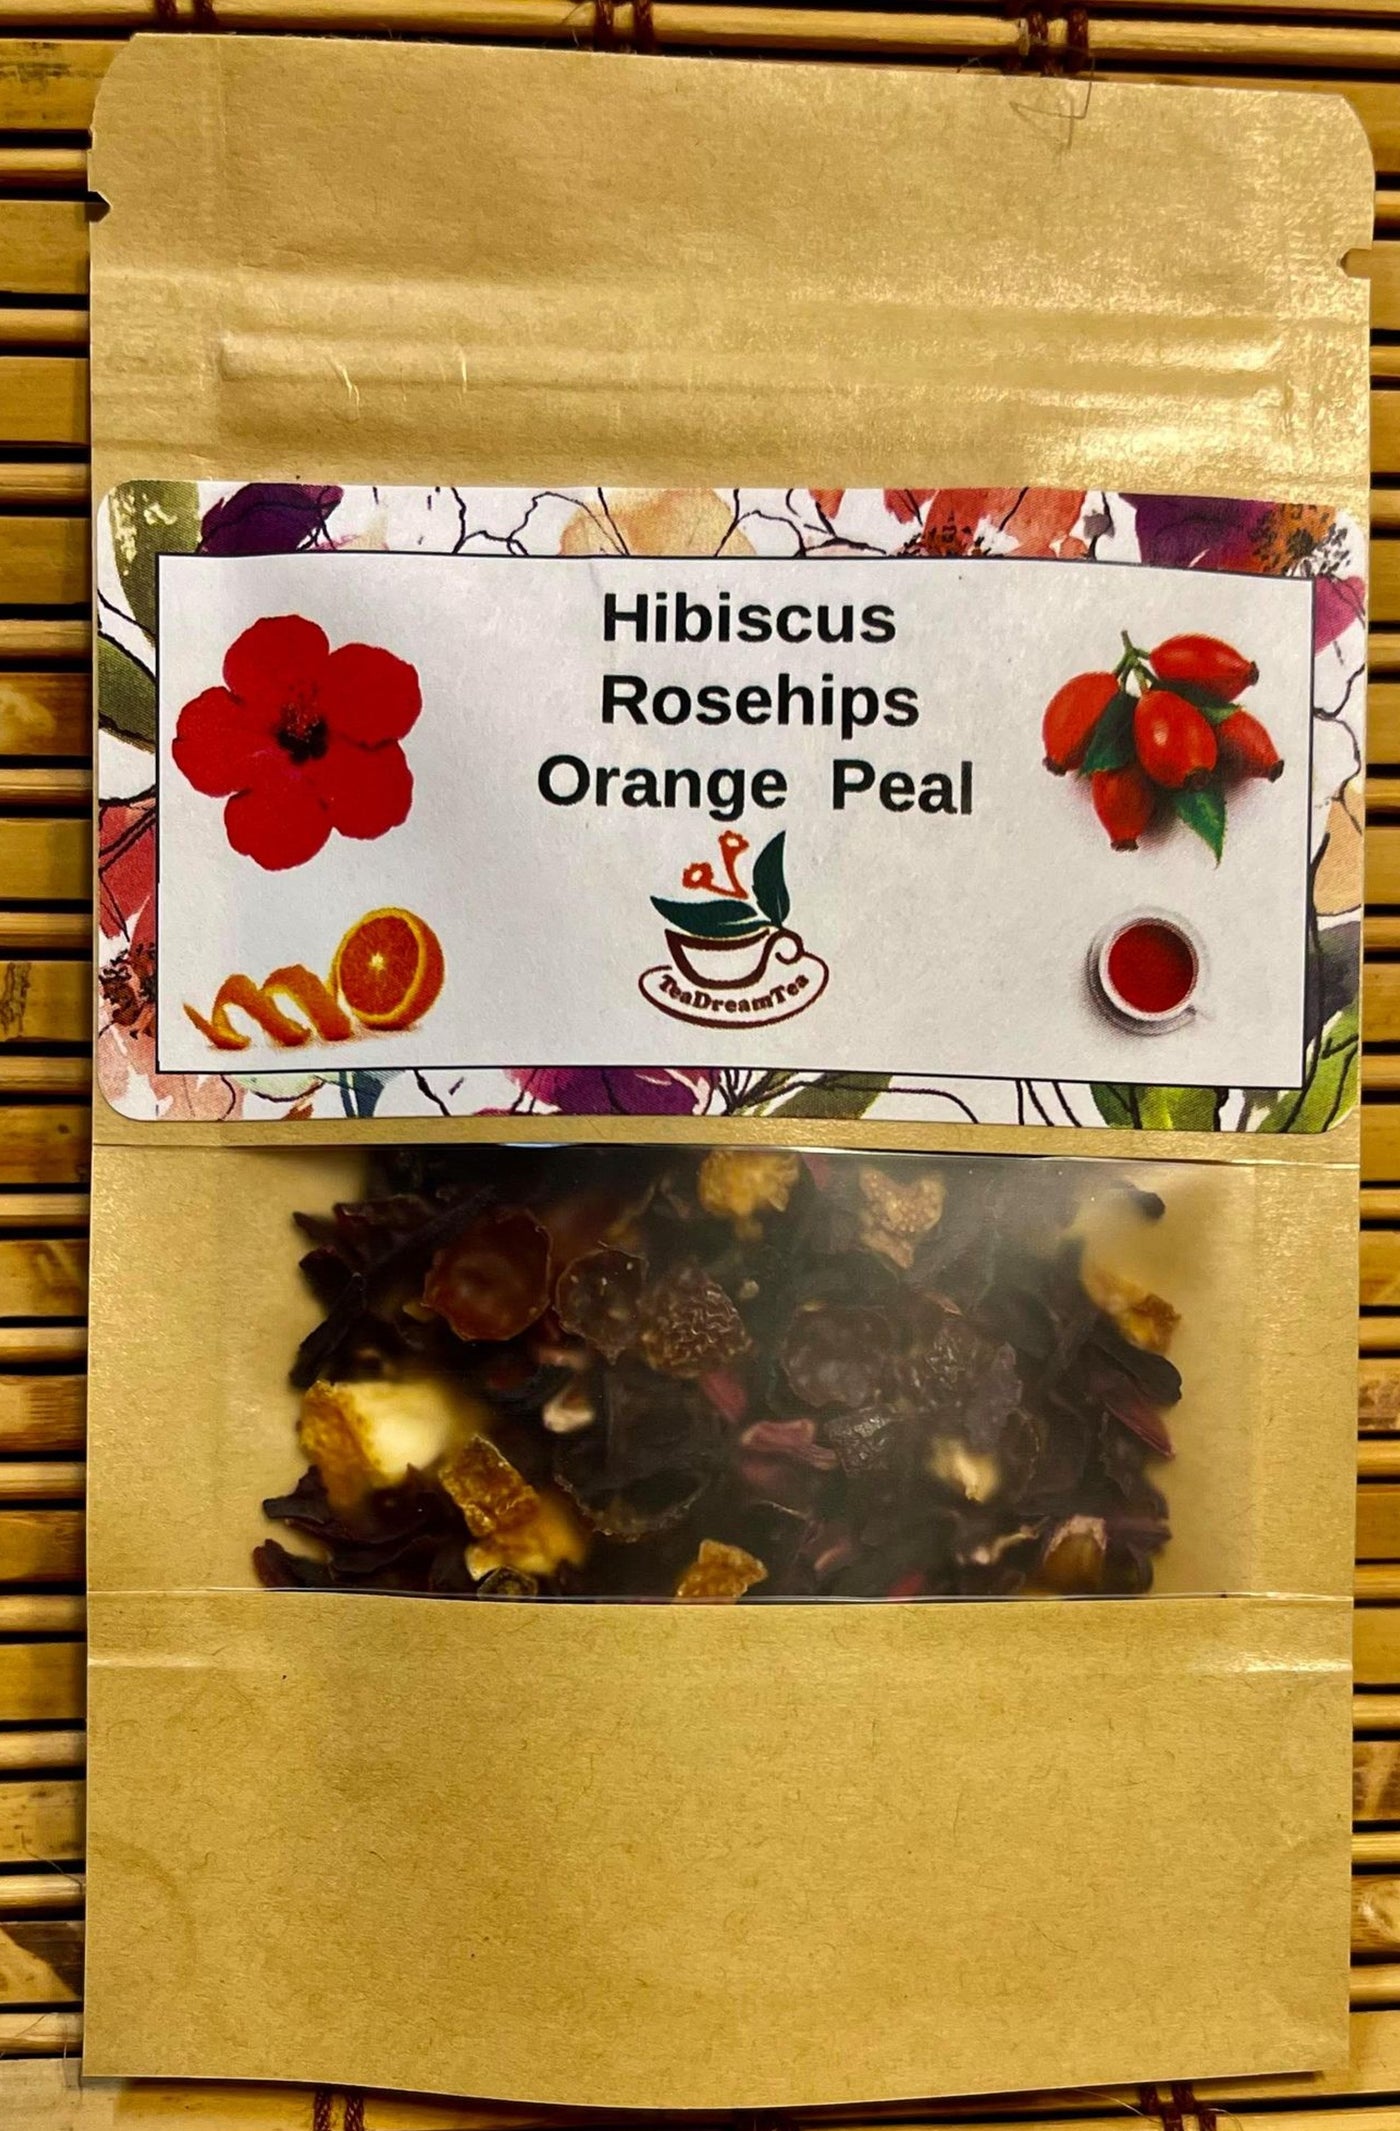 Herbal loose leaf tea blend tin bucket gift set